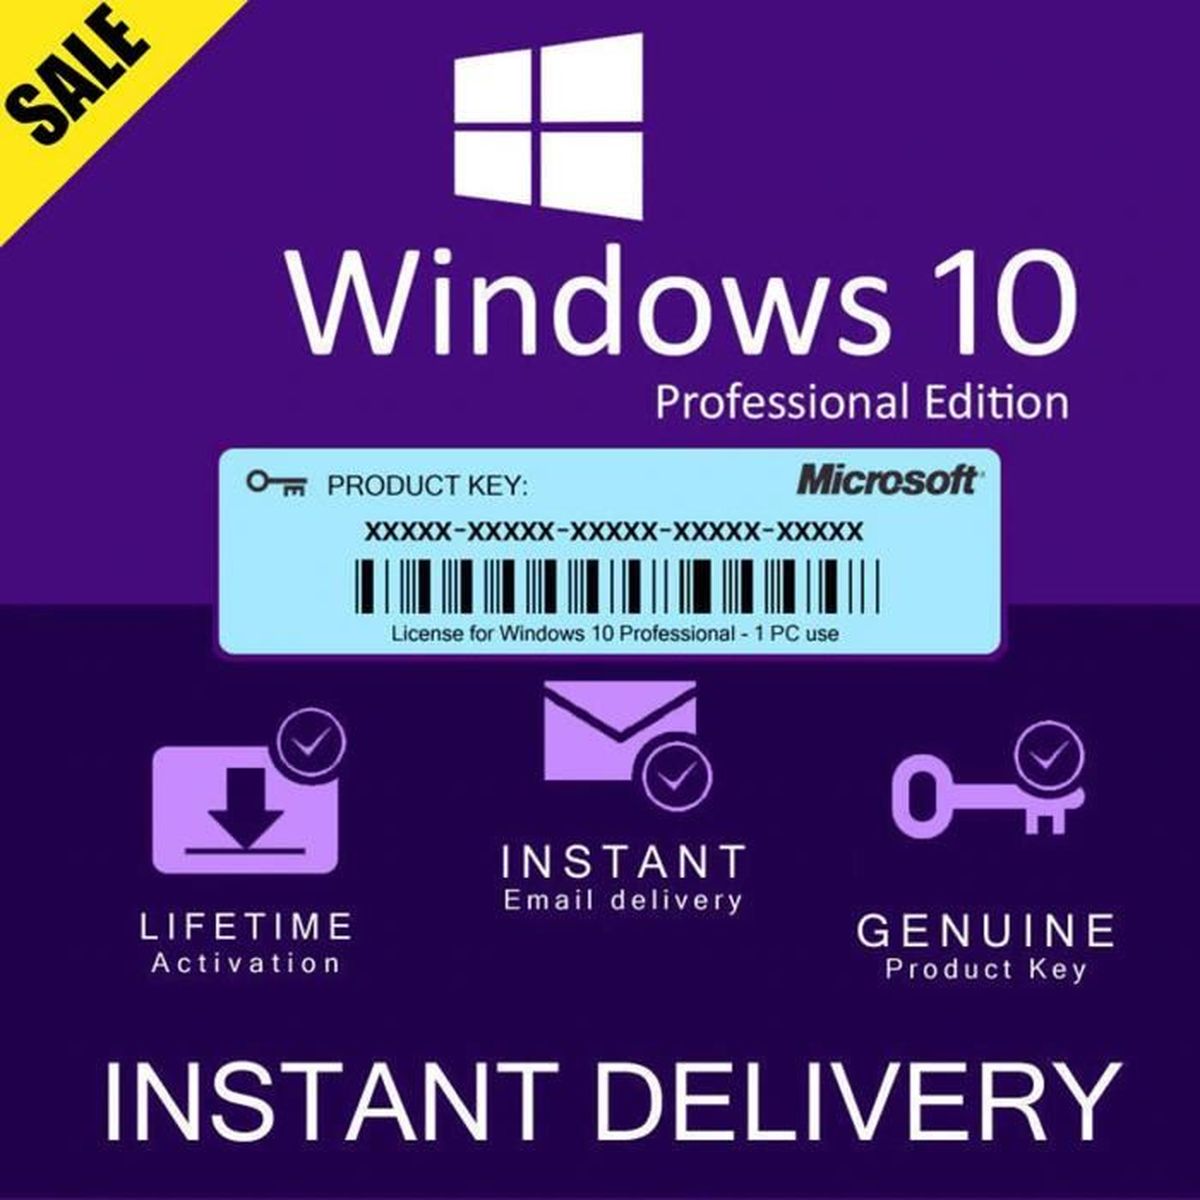 legit way to buy a windows 10 pro key